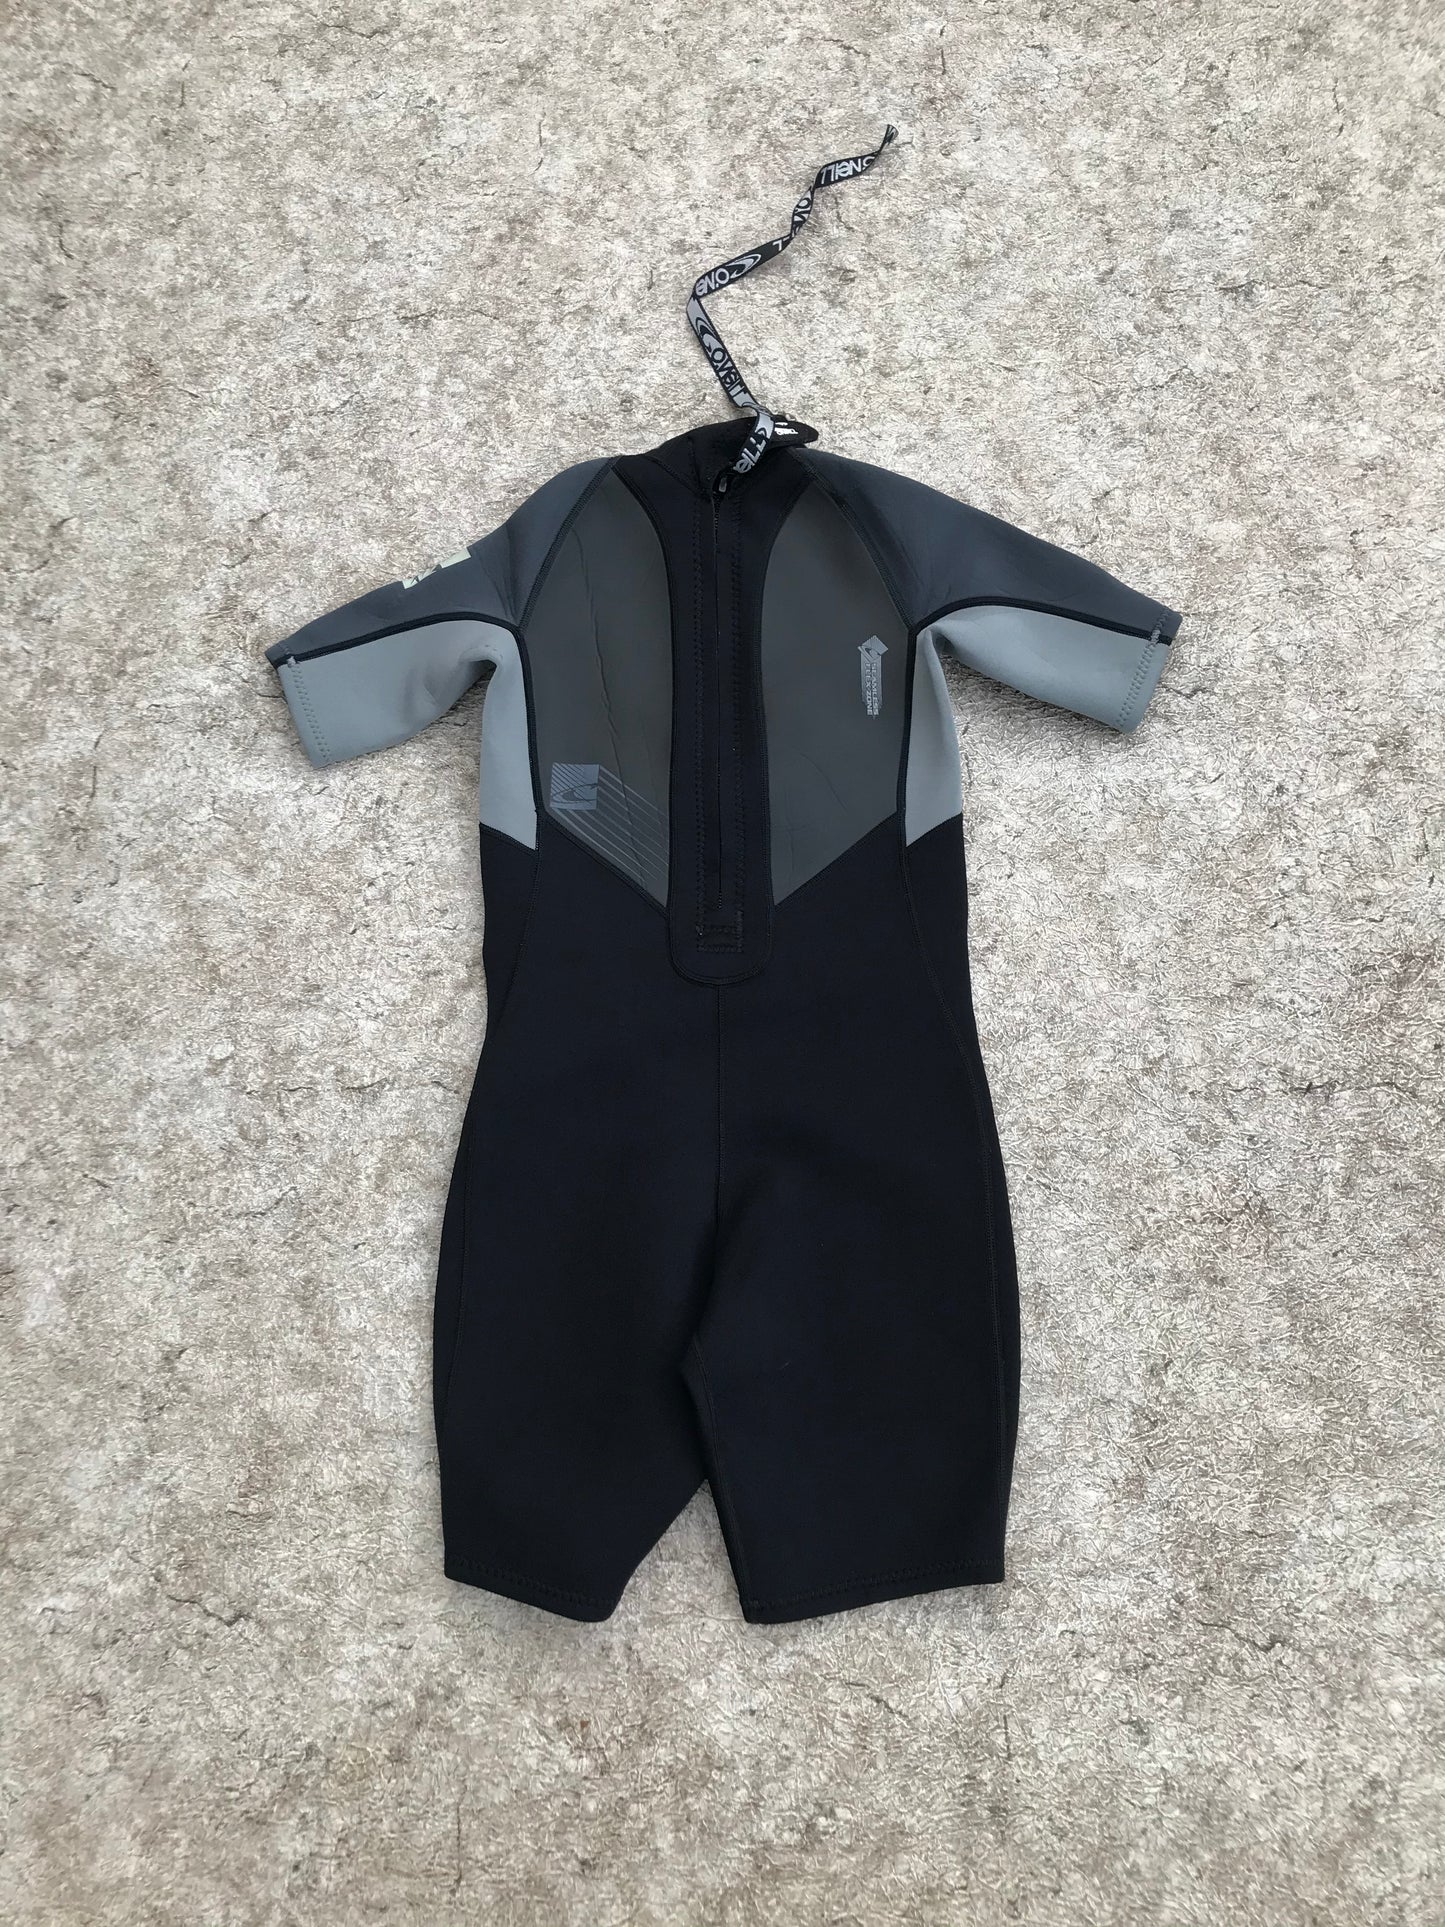 Wetsuit Child Size 12 Oneill Black Grey 2-3 mm Neoprene Excellent